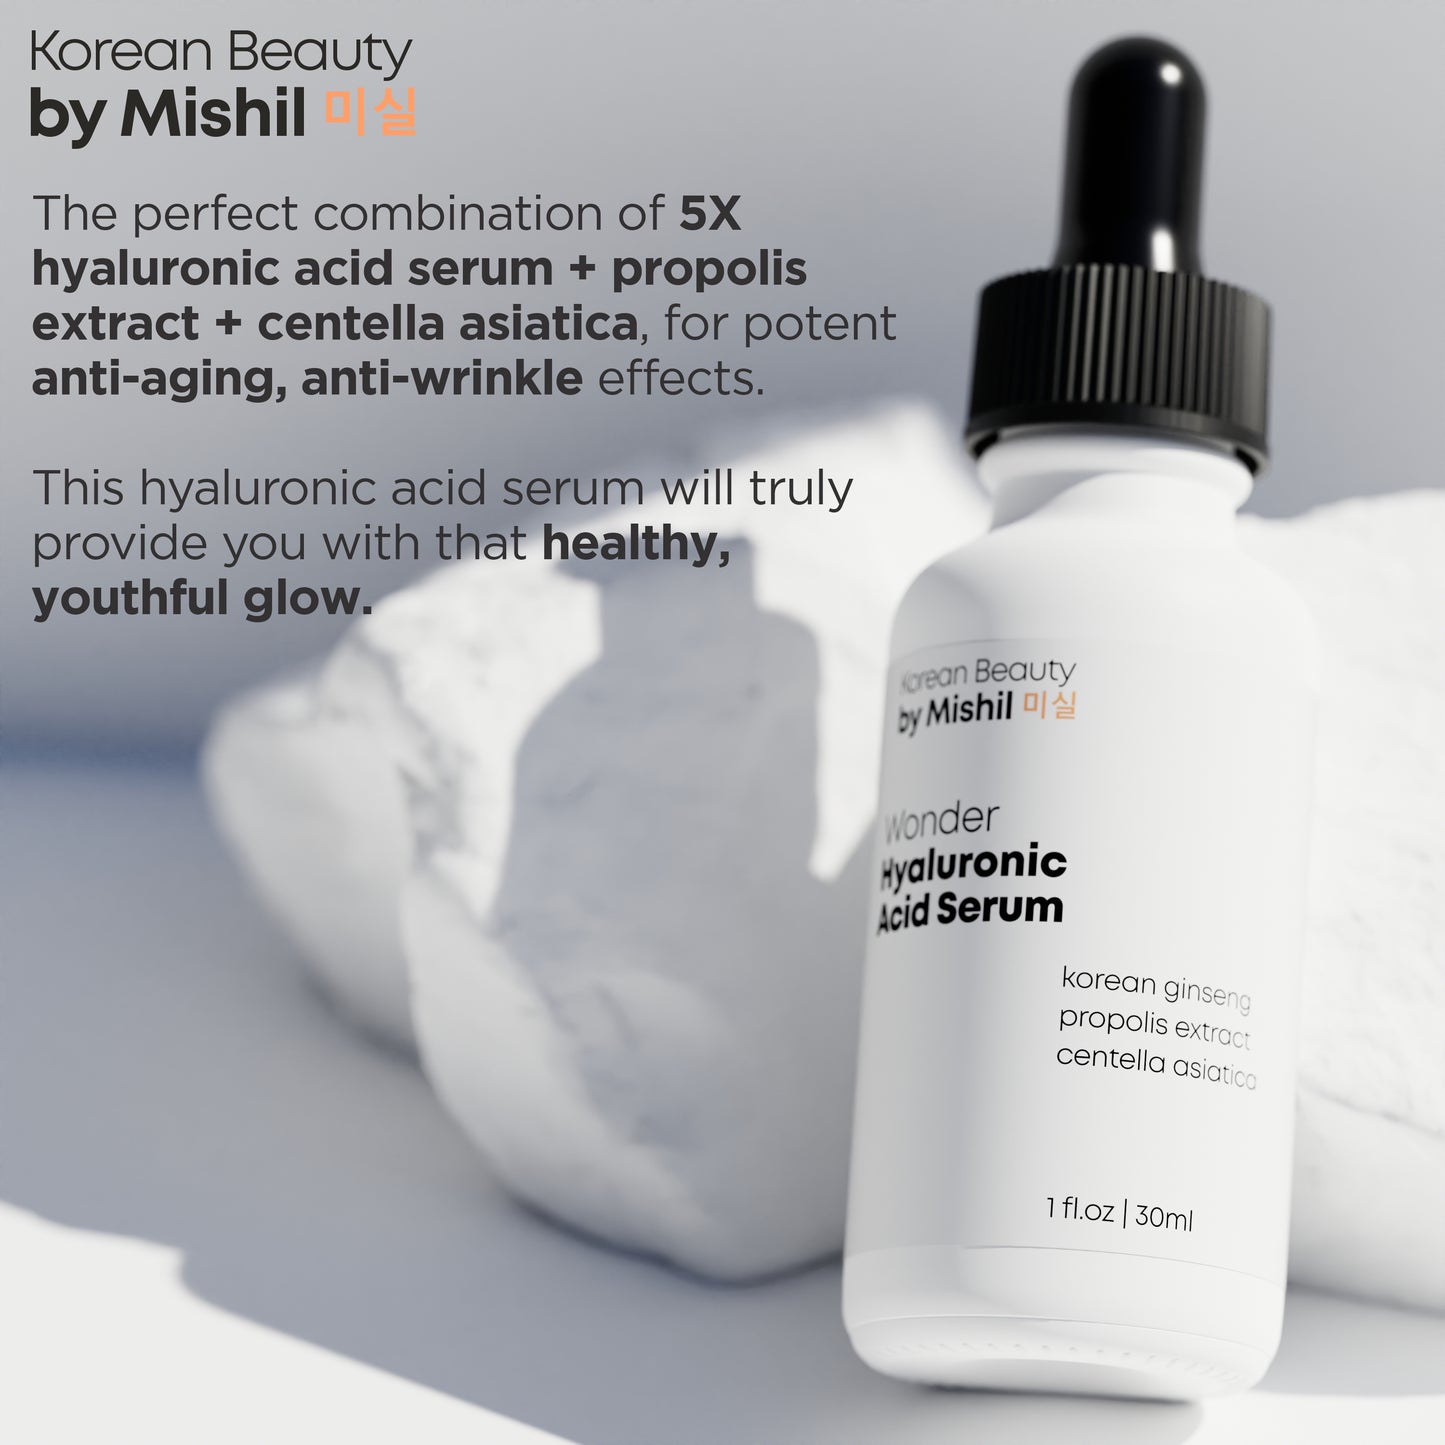 Wonder Hyaluronic Acid Serum